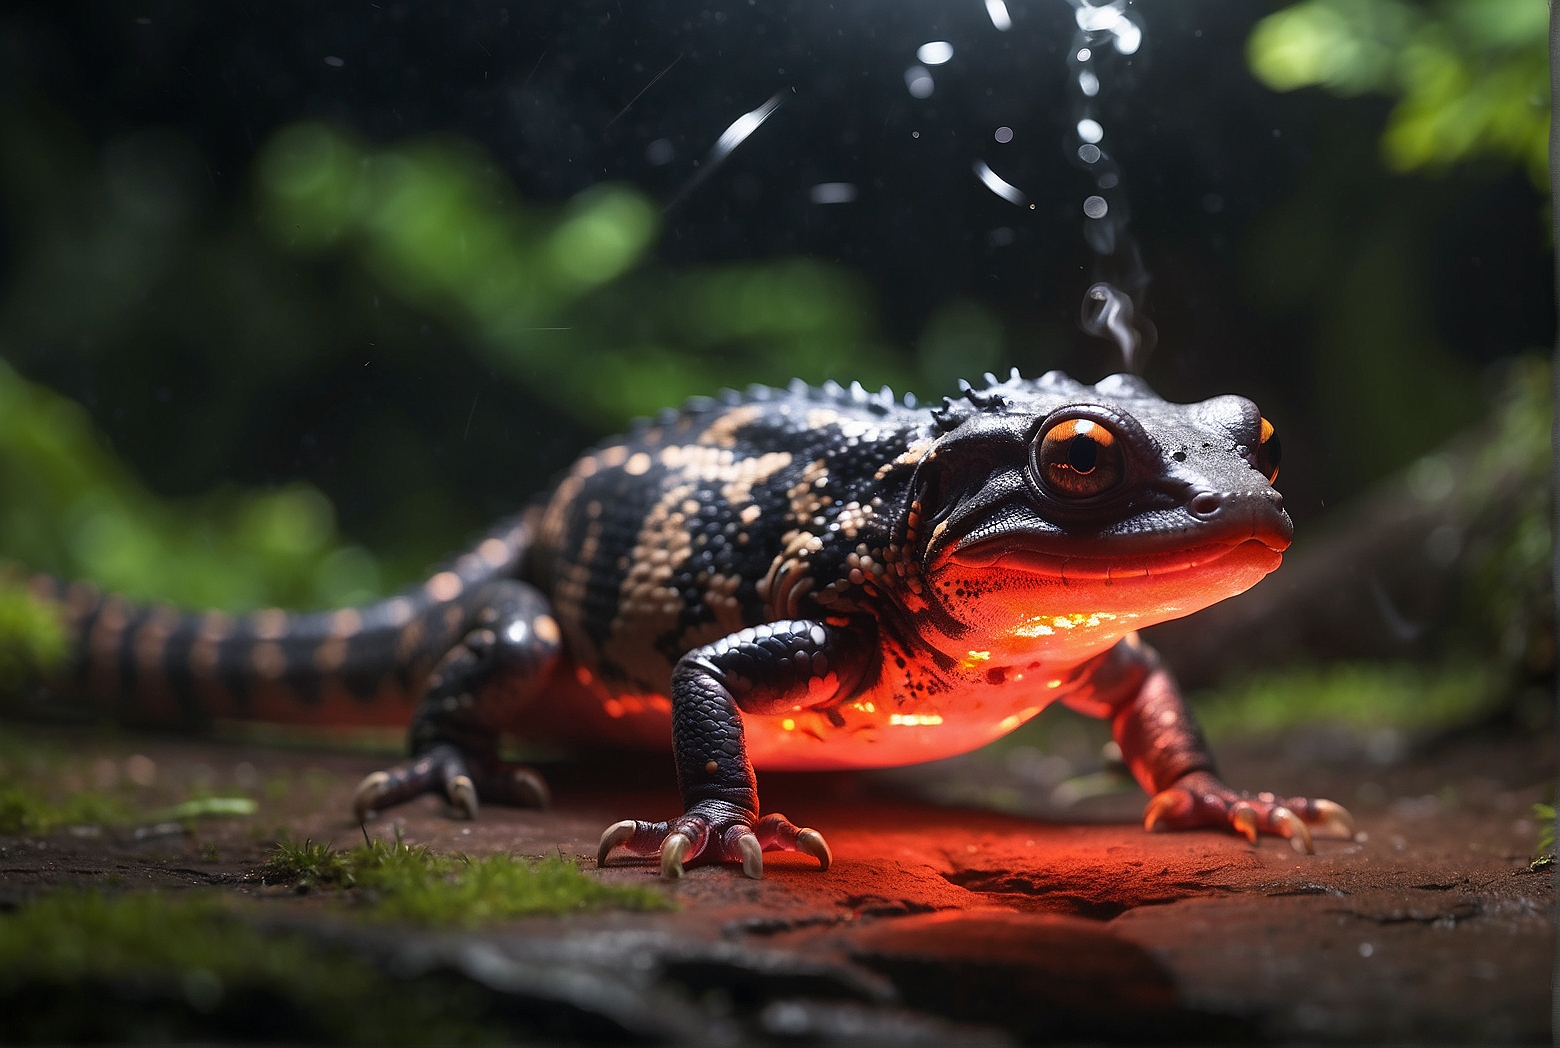 Why Do Salamanders Need a Heat Lamp?